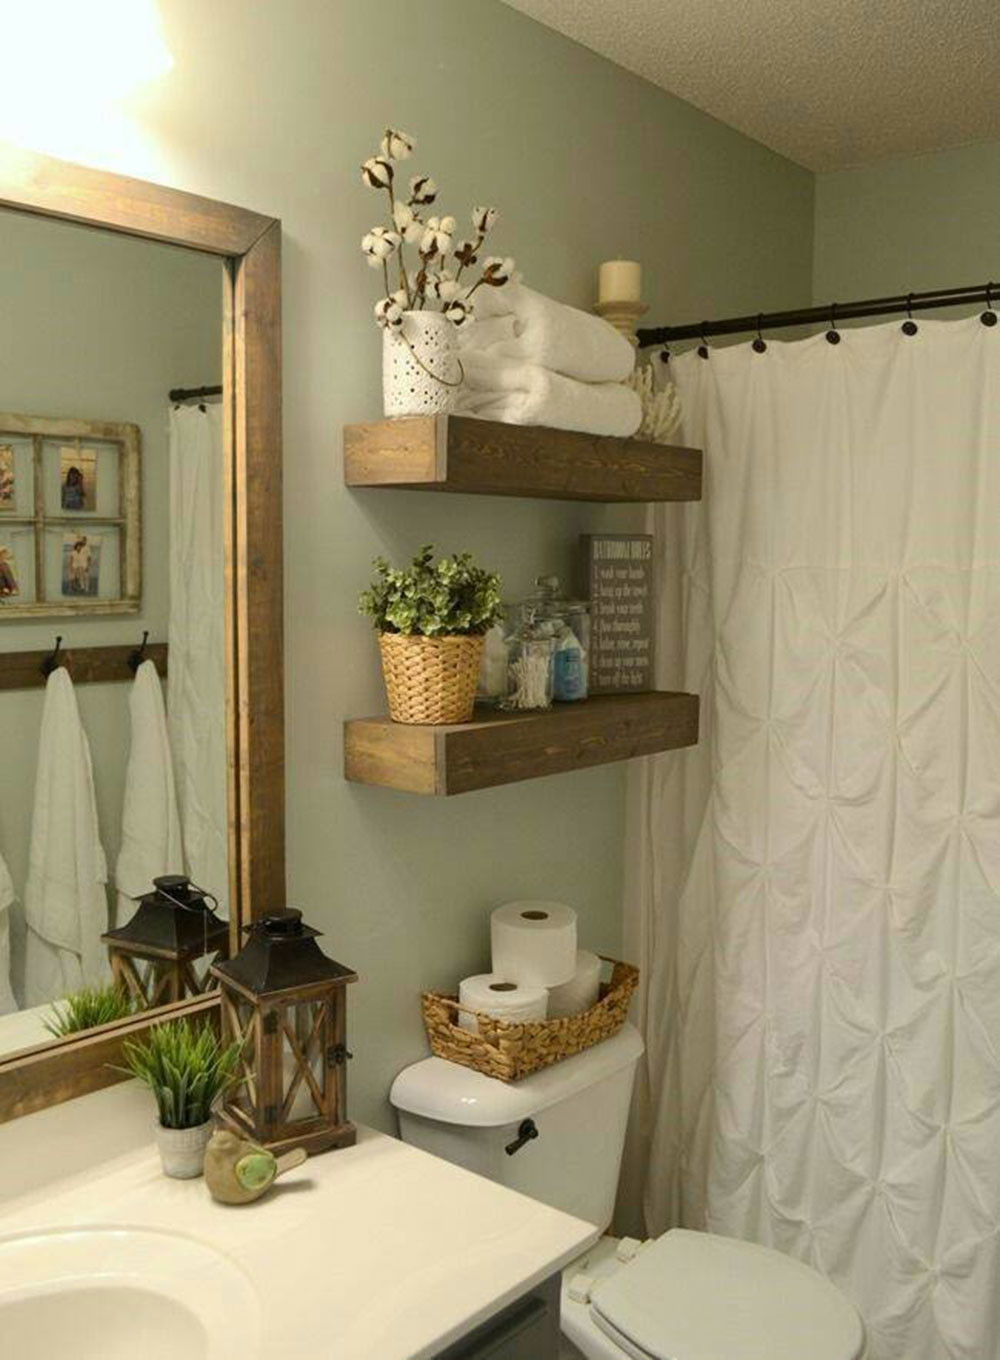 Small Bathroom Shelf Ideas
 Small bathroom shelf ideas to optimize your bathroom space